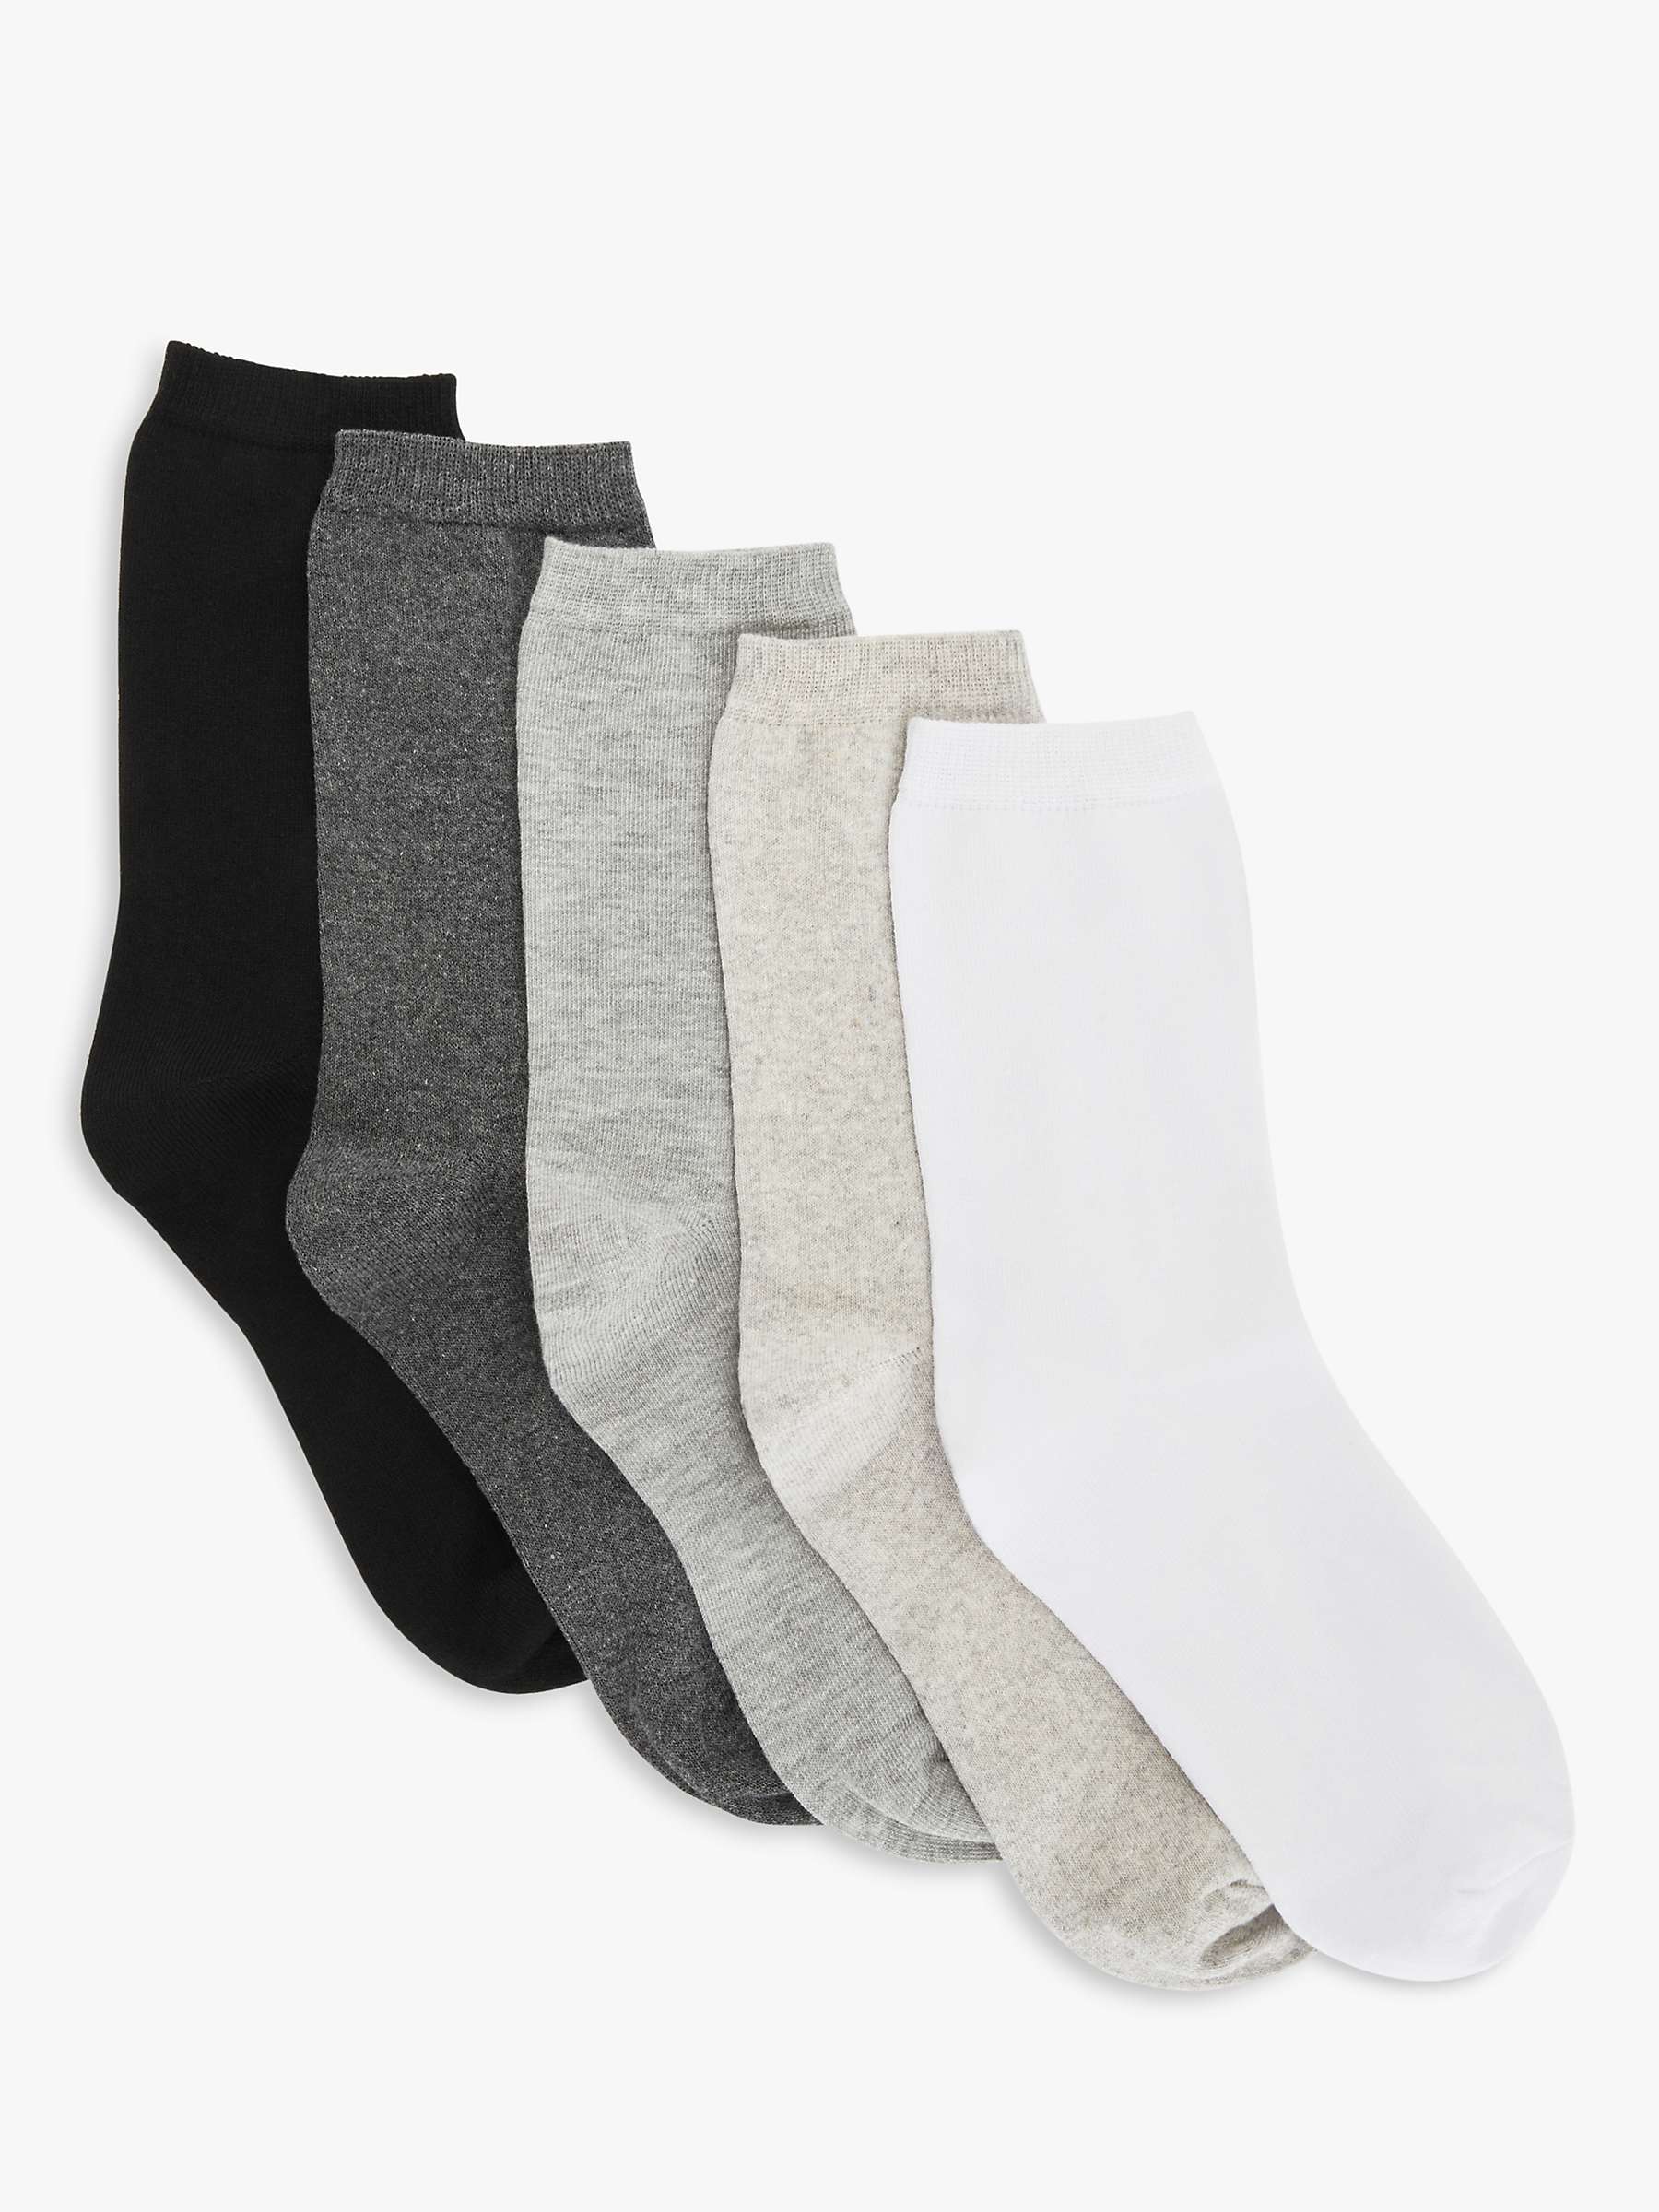 Buy John Lewis Ankle Socks, Pack of 5, Multi Online at johnlewis.com